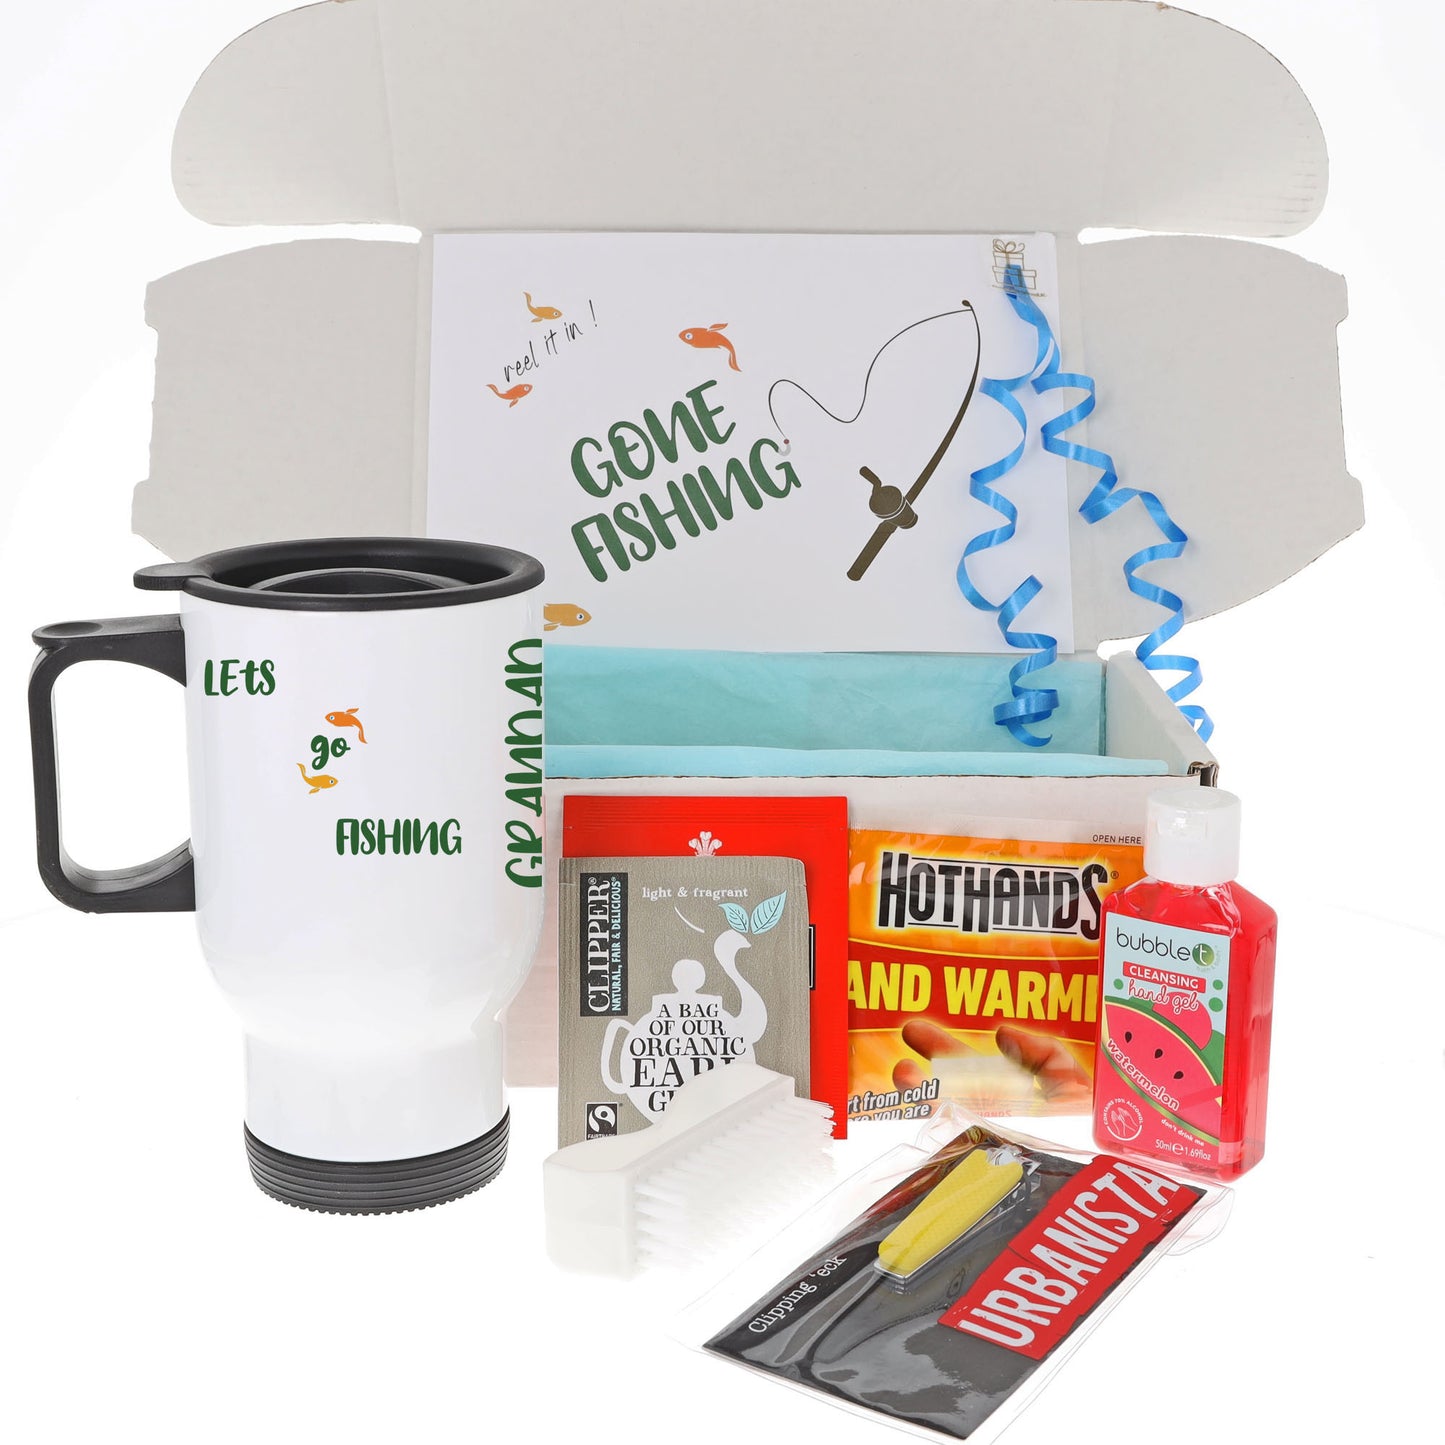 Personalised Sublimated Fishing Flask Gift  - Always Looking Good - Travel Mug Set With Tea  